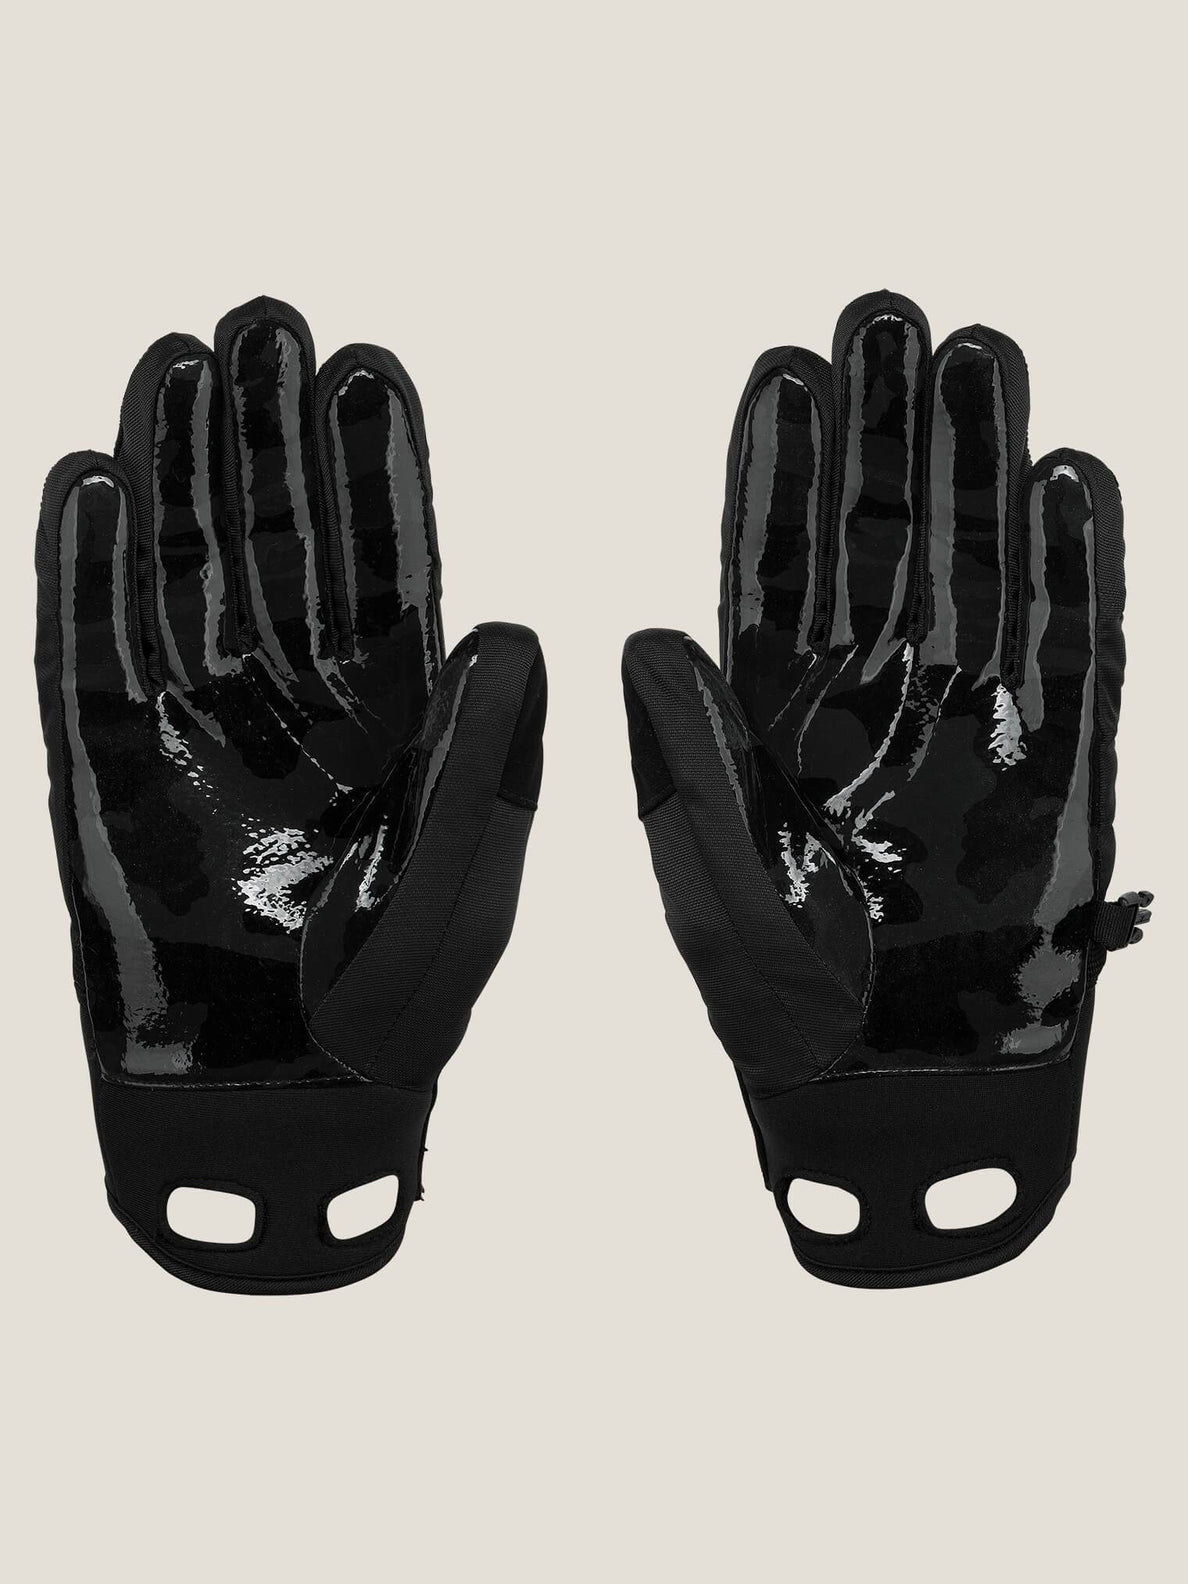 Crail Glove - Black